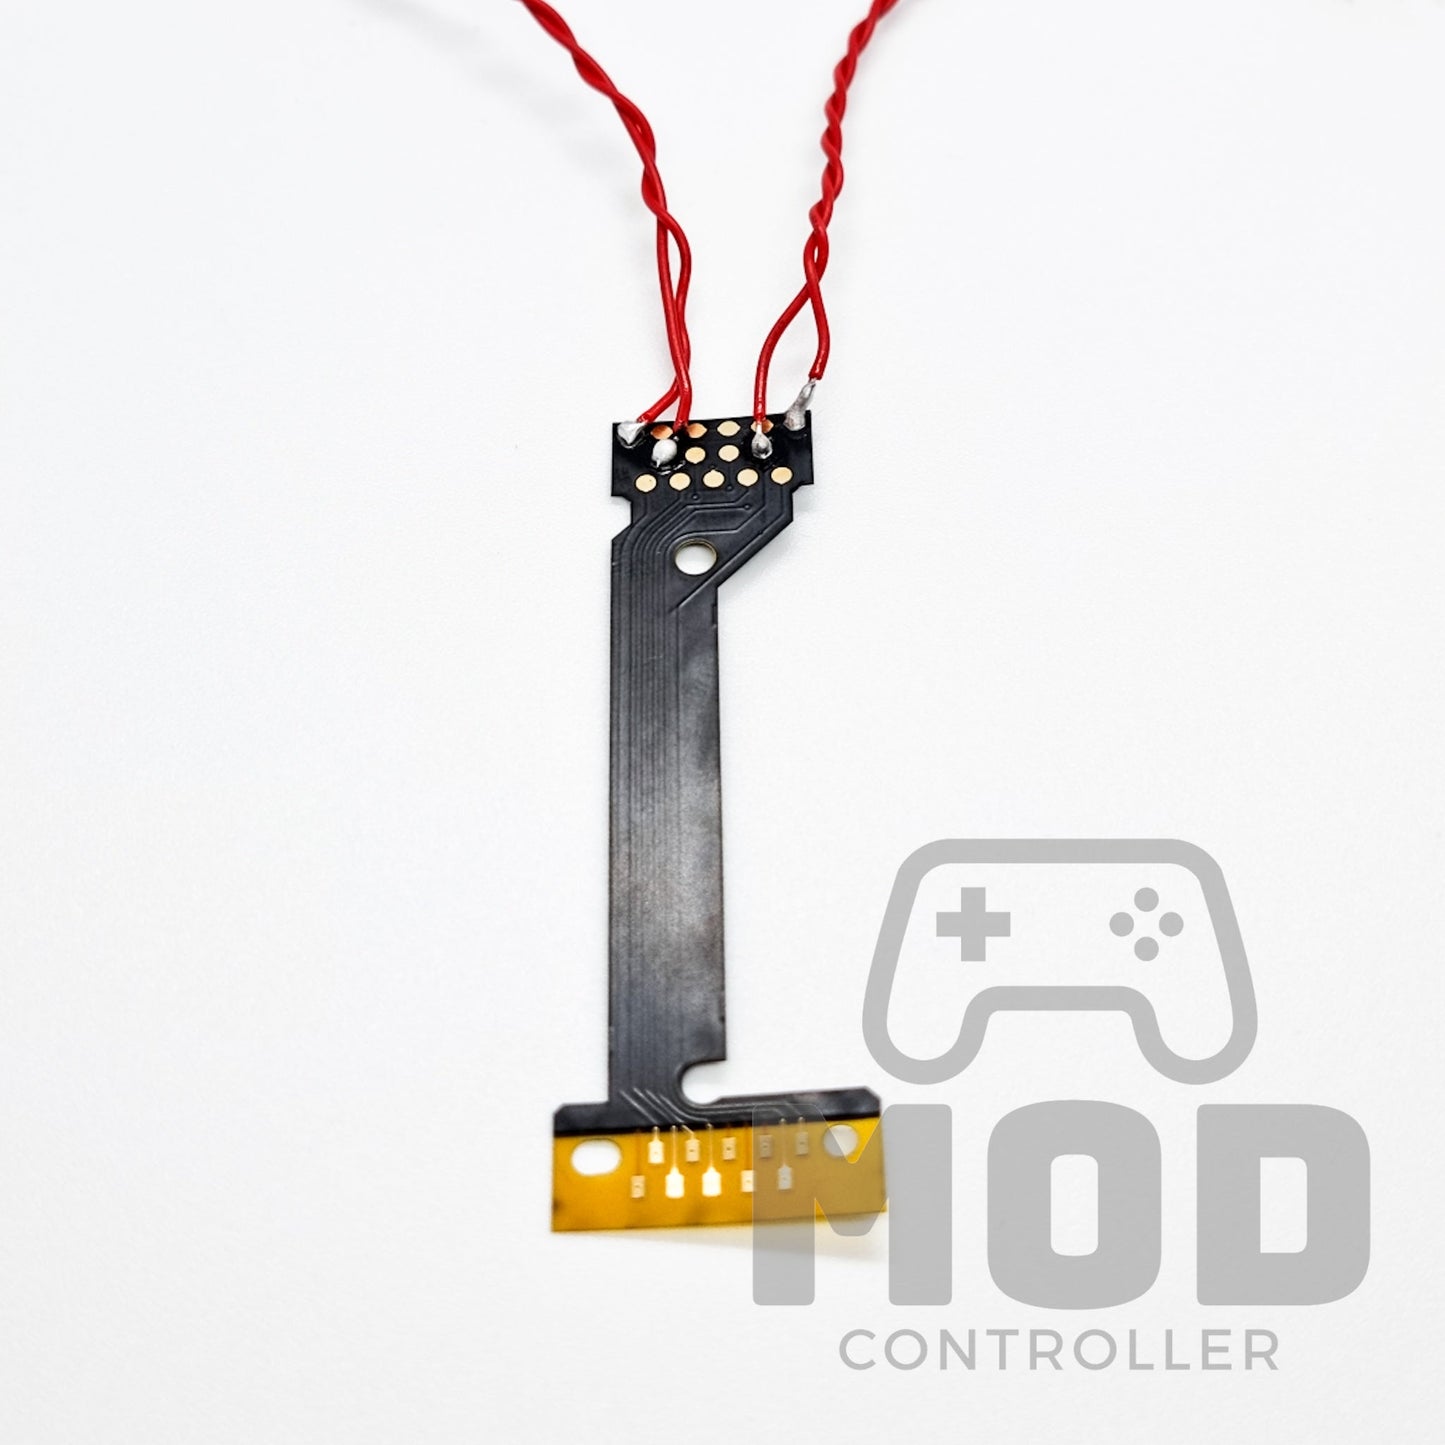 PS5 Controller Paddle Einbauset - Paddles von Modcontroller - Nur 14.95€! Jetzt kaufen bei Modcontroller